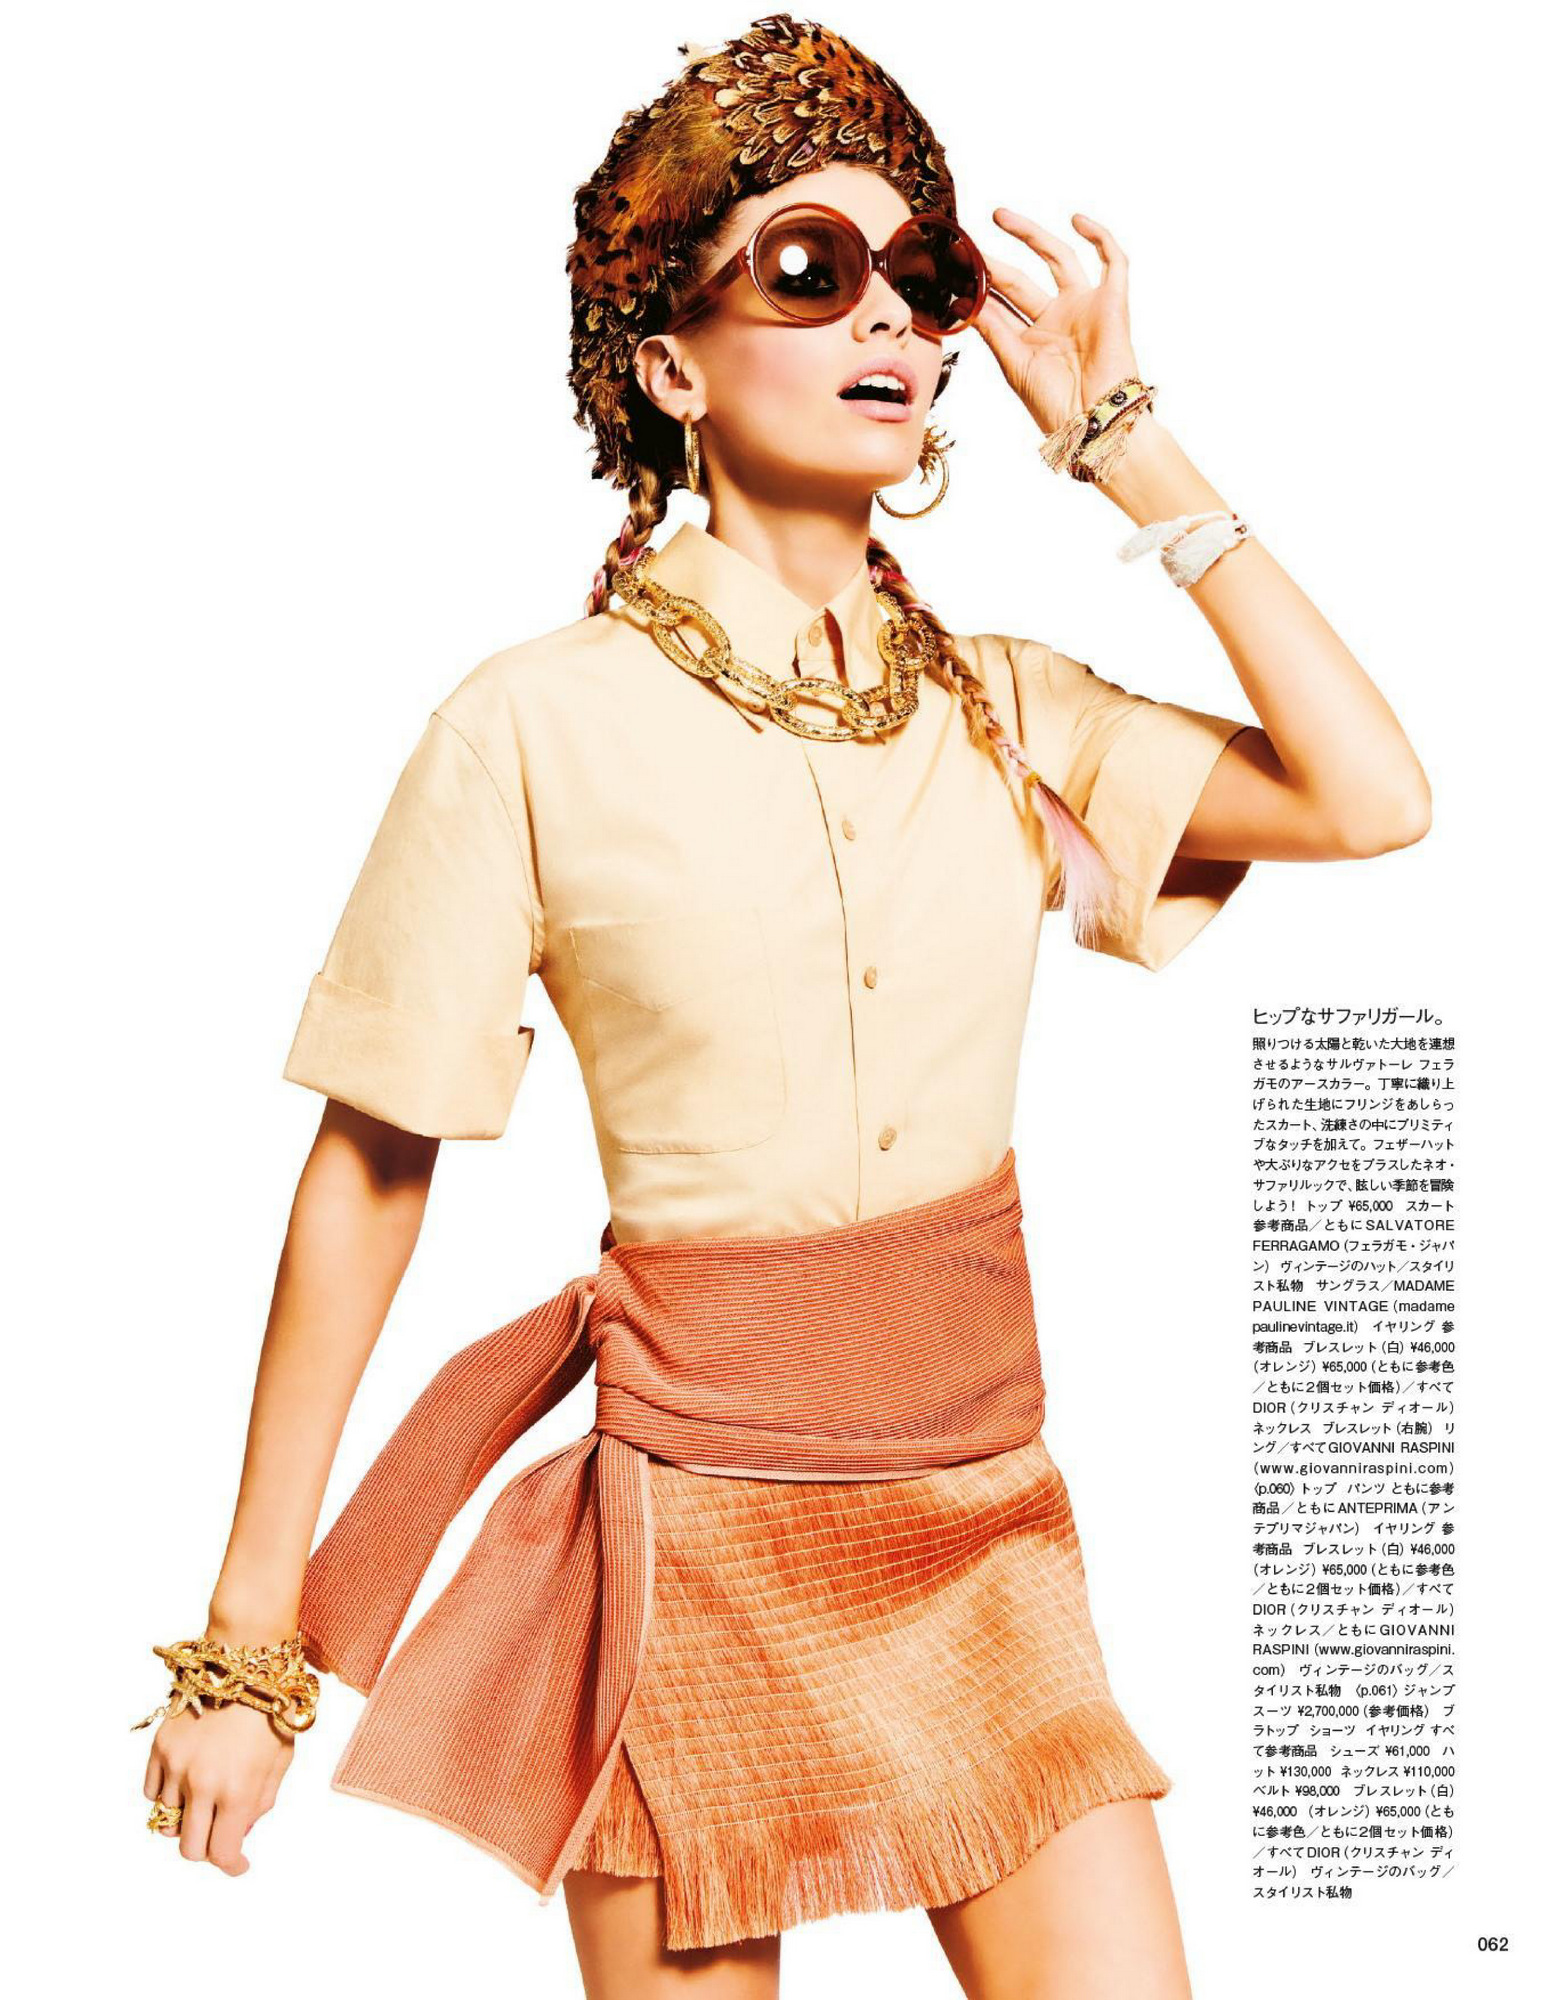 Stella Maxwell Beachin’ it For Vogue! - Photo 15